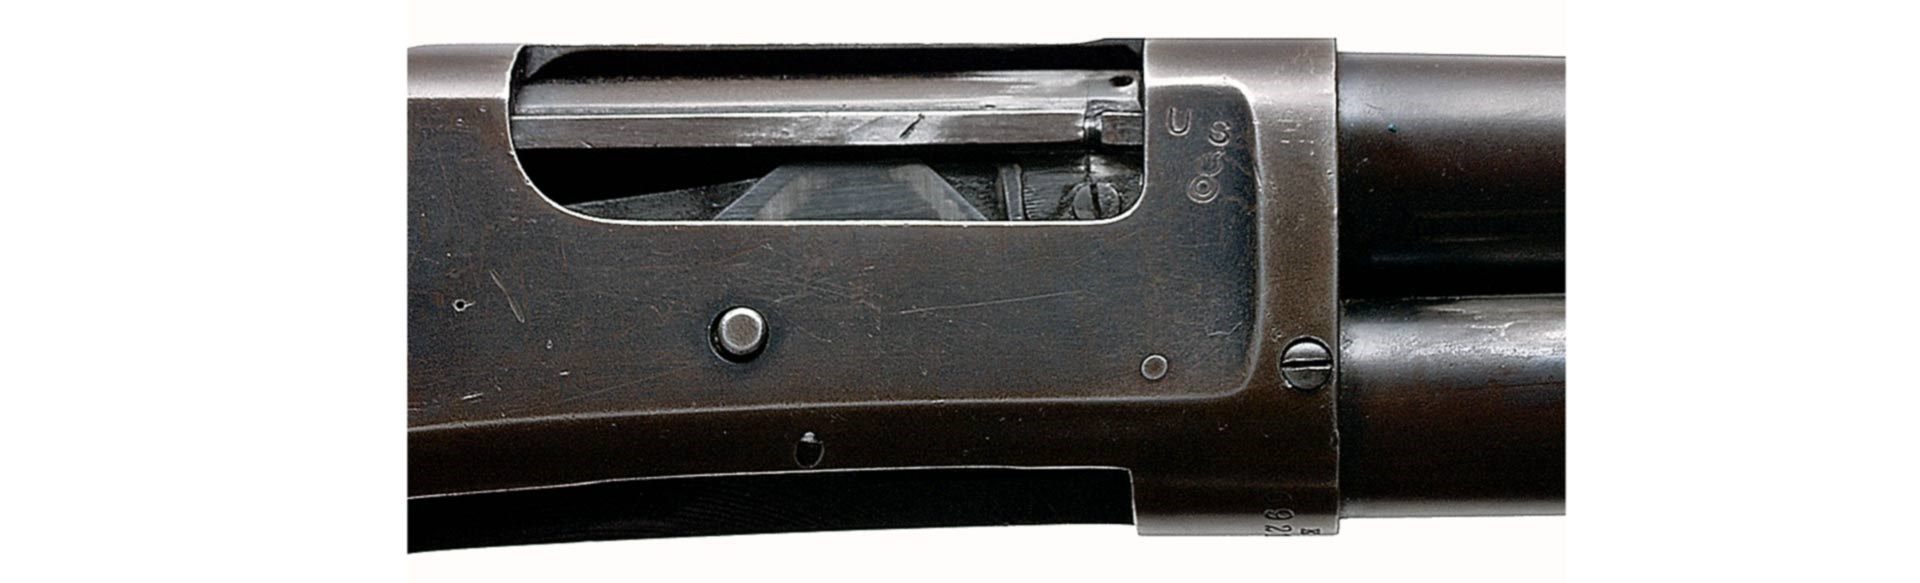 closeup shotgun receiver metal finish coloring